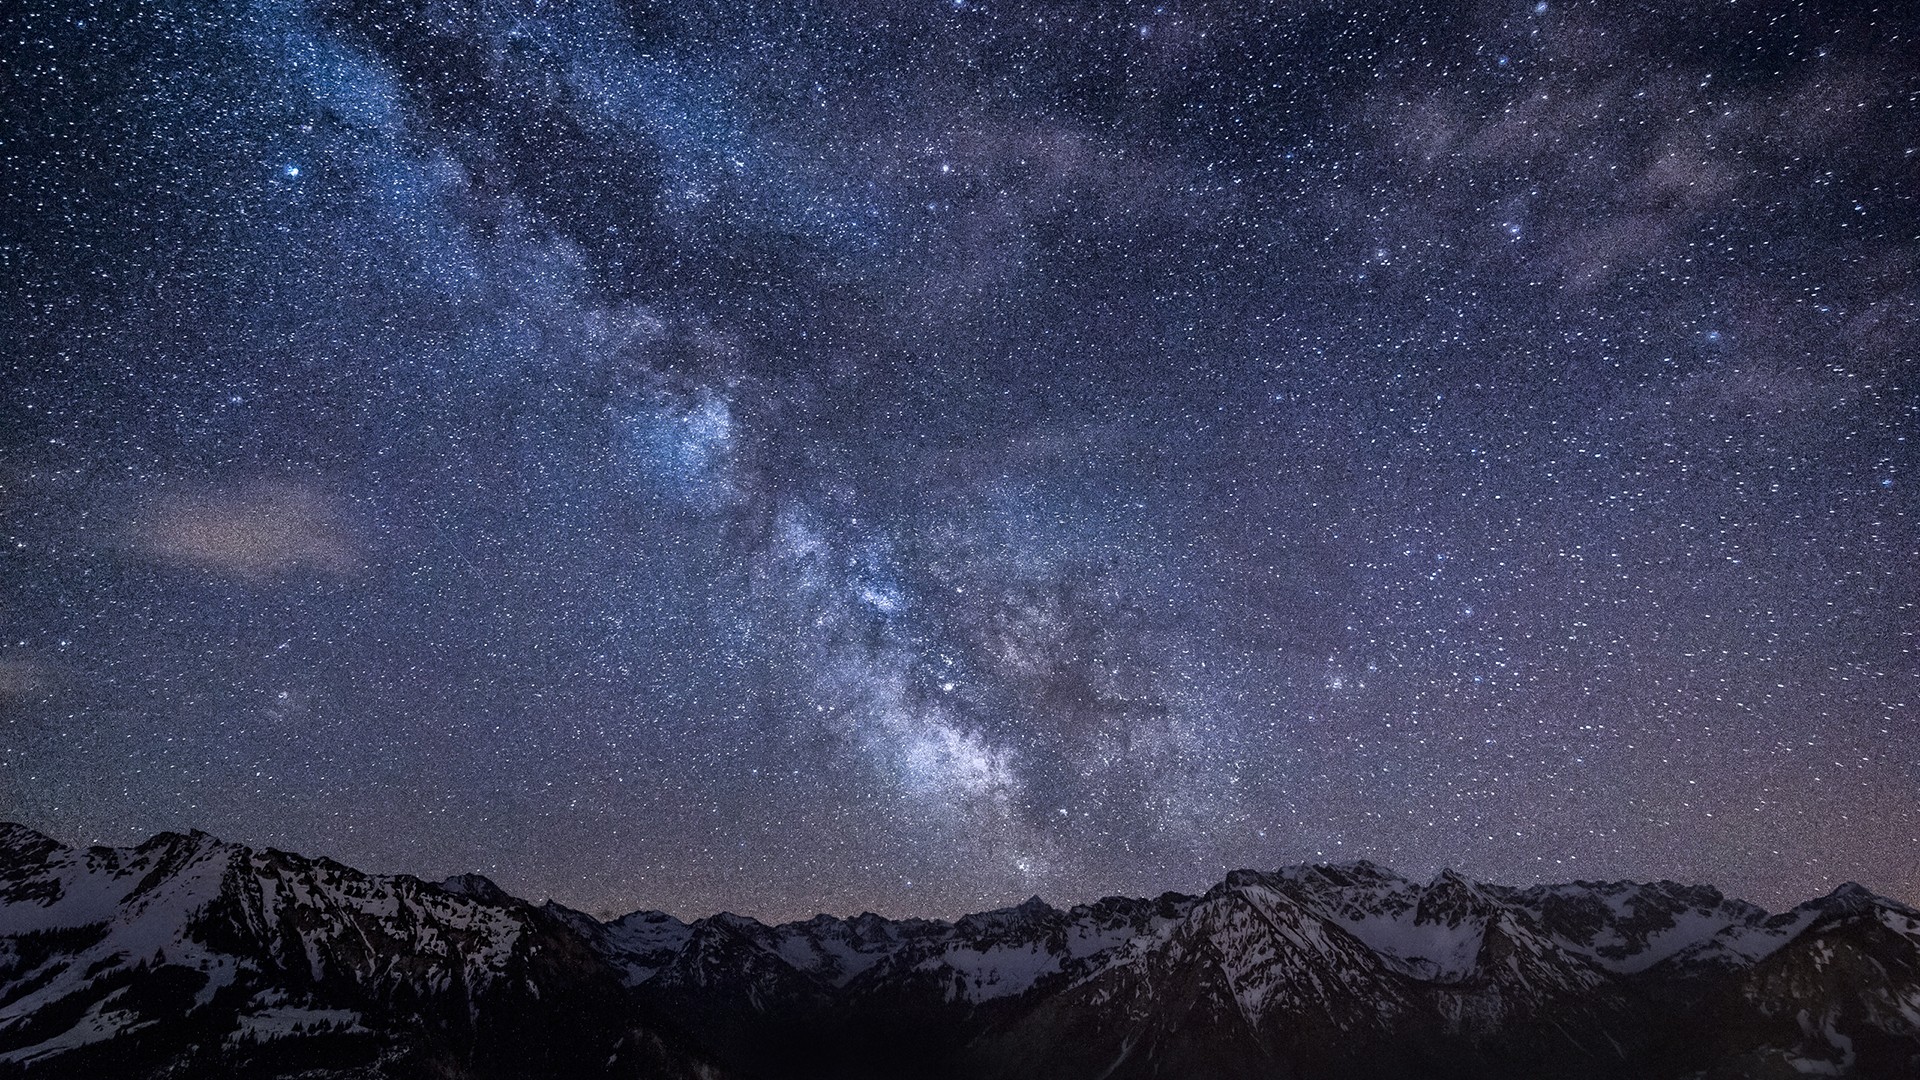 General 1920x1080 nature mountains Milky Way skyscape starry night sky stars snowy peak landscape